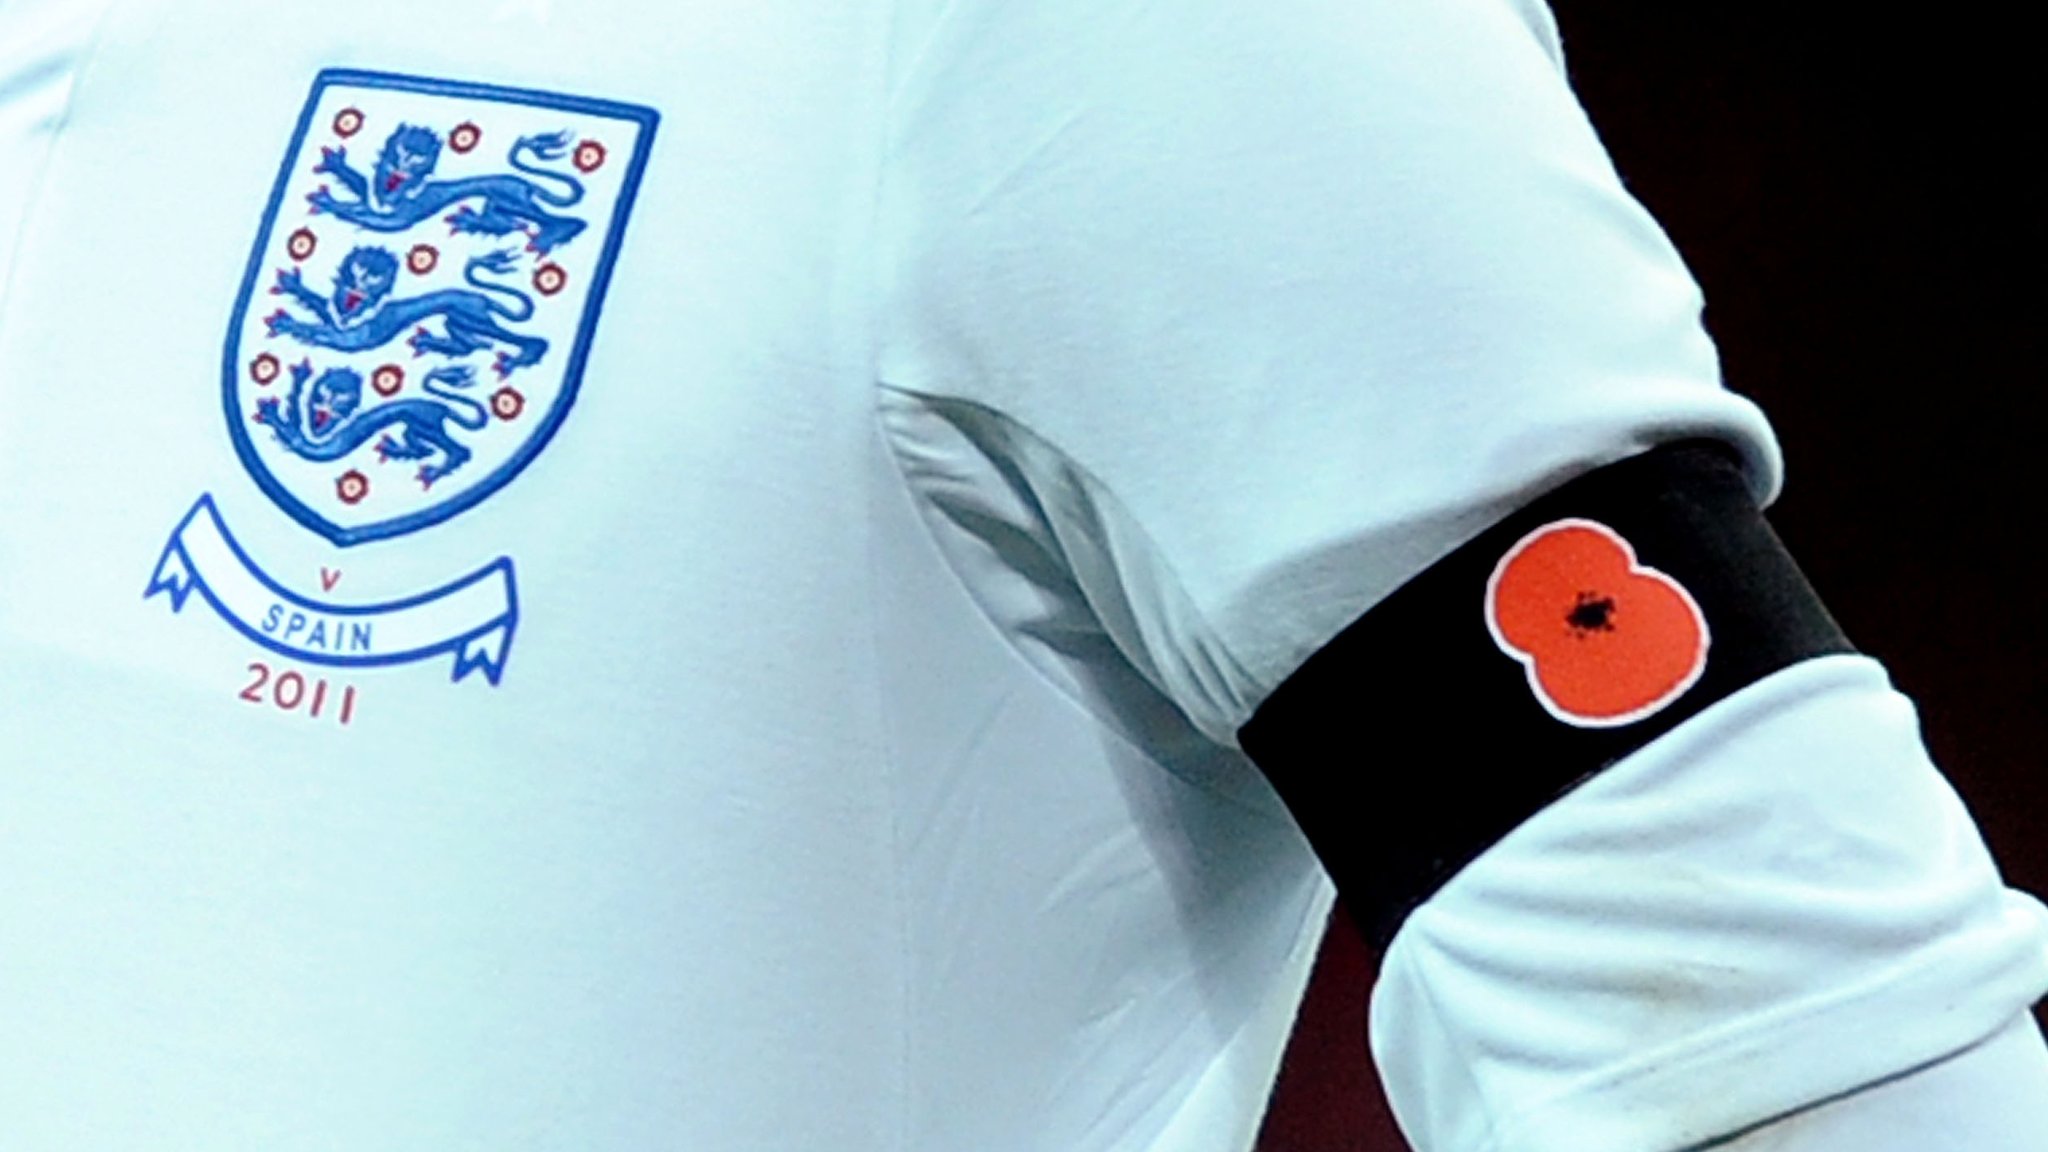 England v Scotland poppy row: Fifa is wrong to get involved - Arsene Wenger